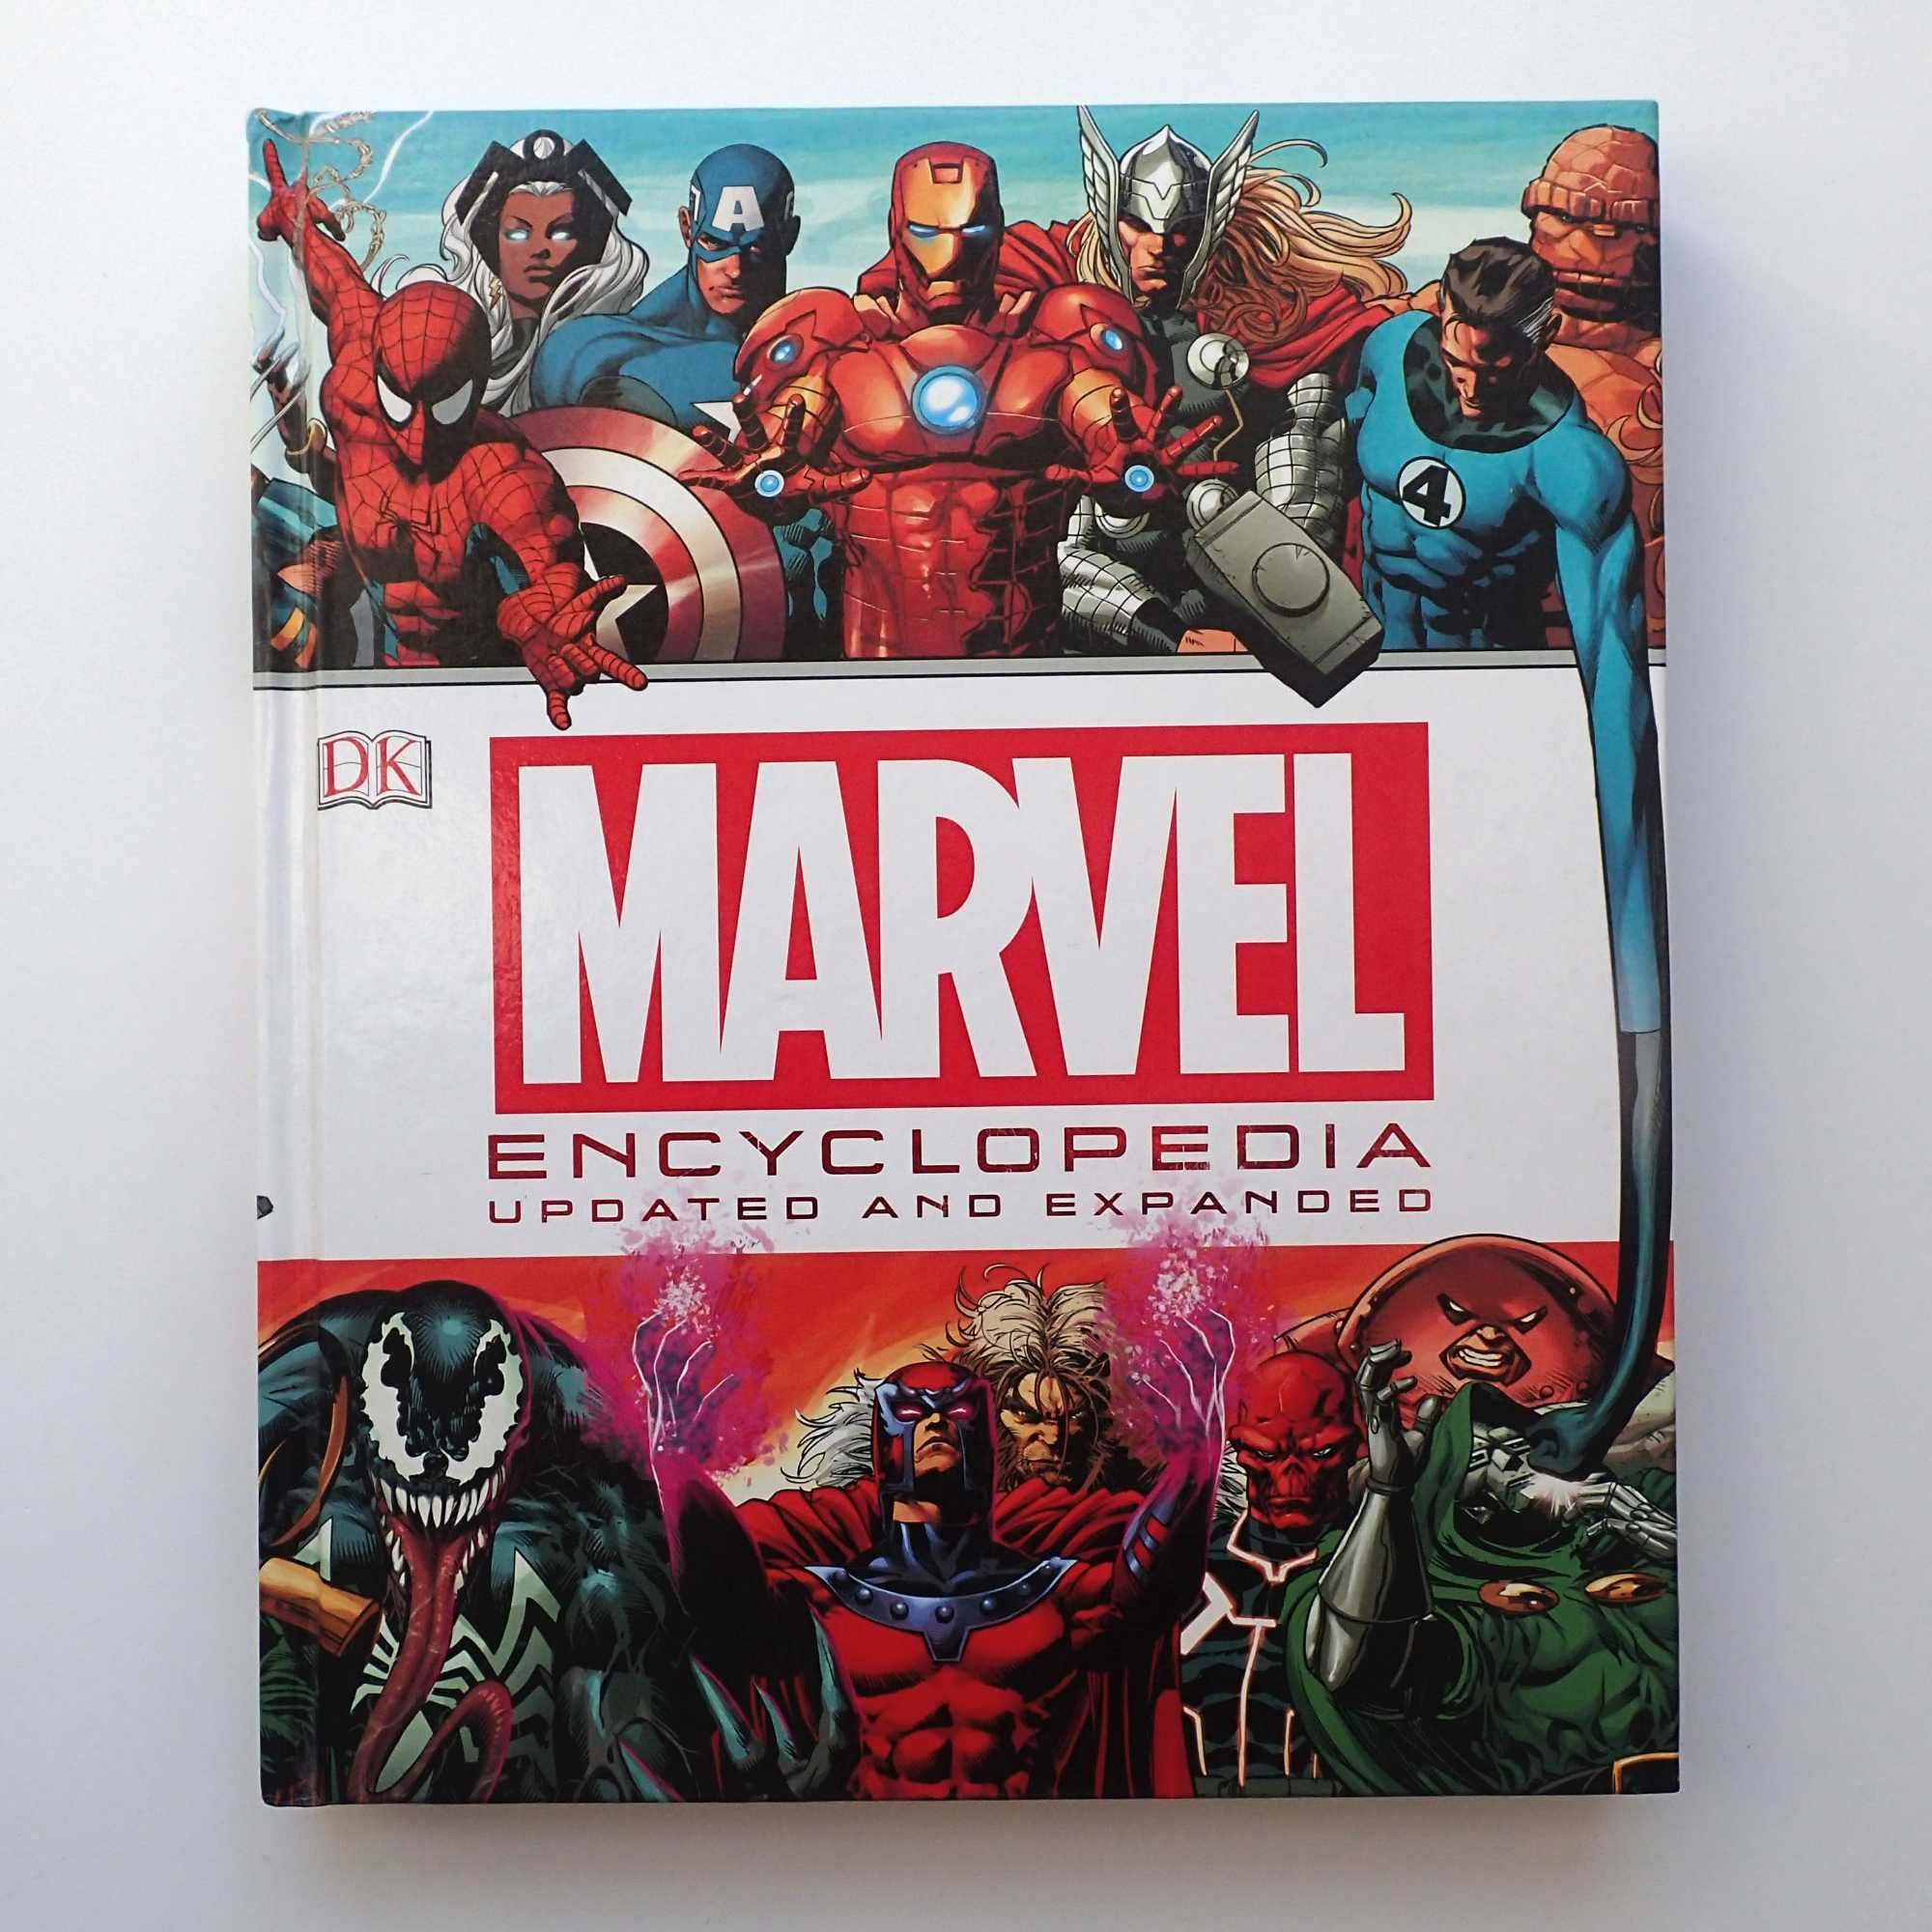 Marvel Encyclopedia updated and expanded, encyklopedia bohaterów